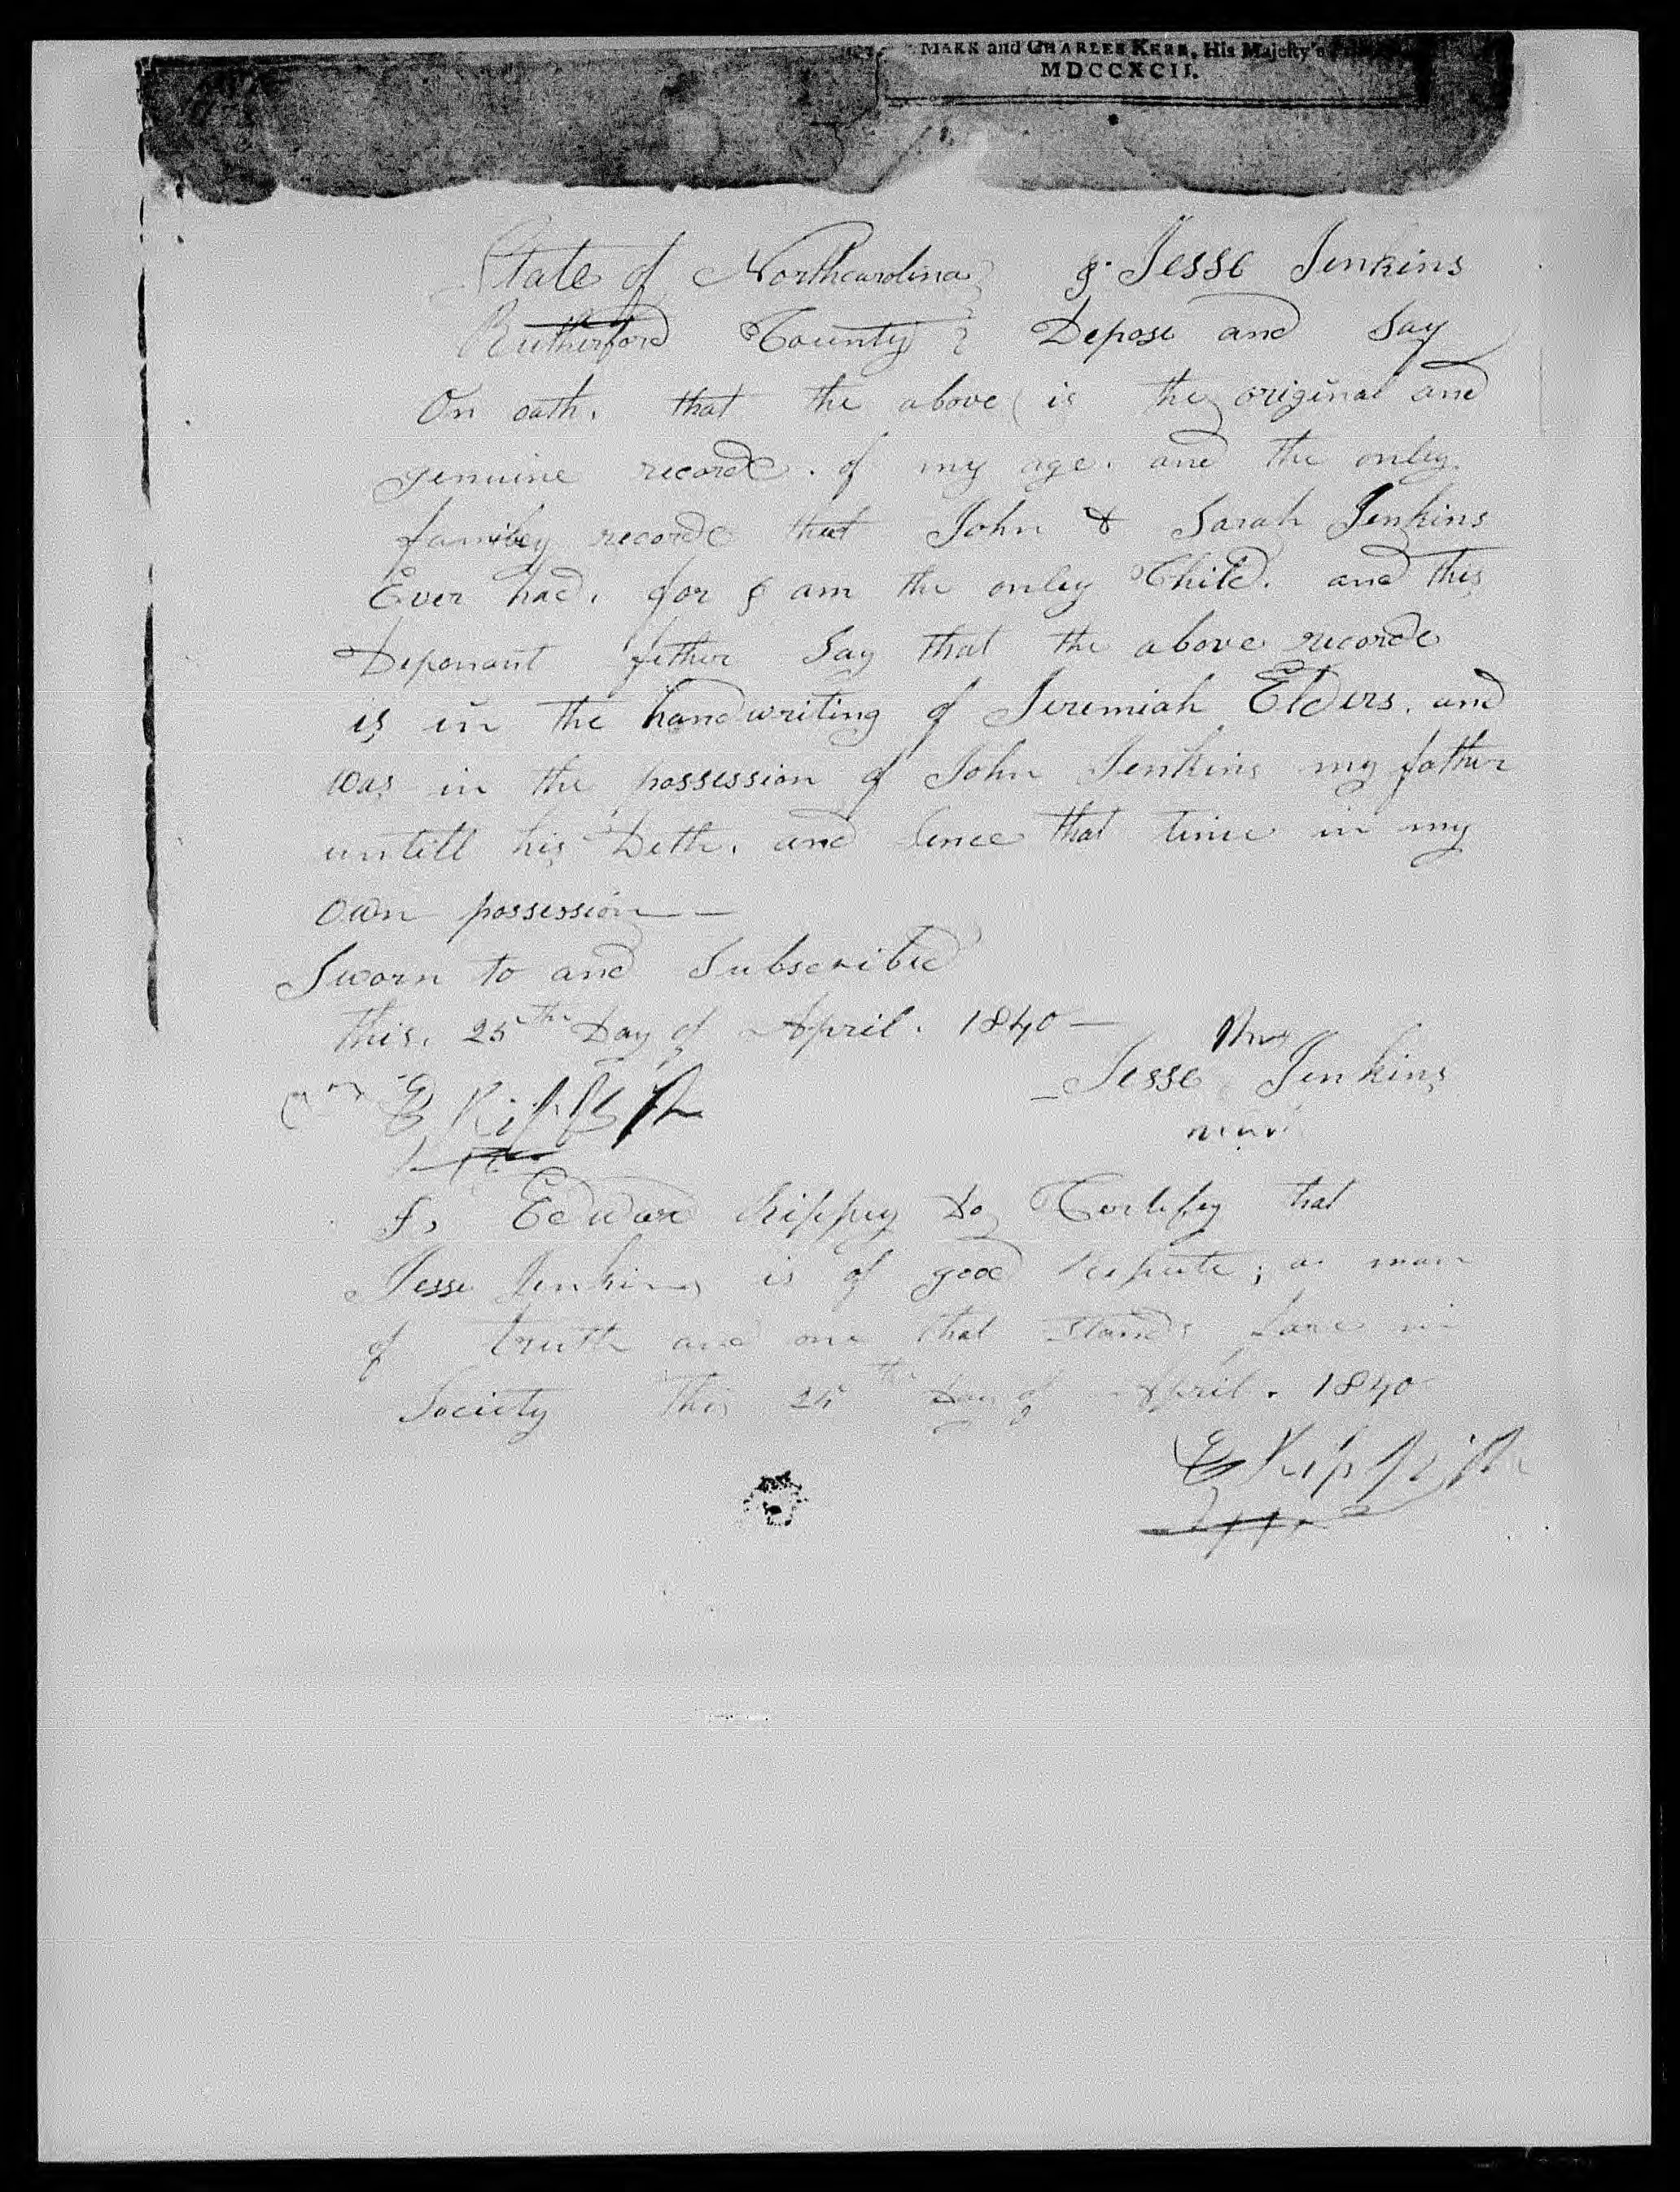 Affidavit of Jesse Jenkins in support of a Pension Claim for Sarah Jenkins, 25 April 1840, page 1